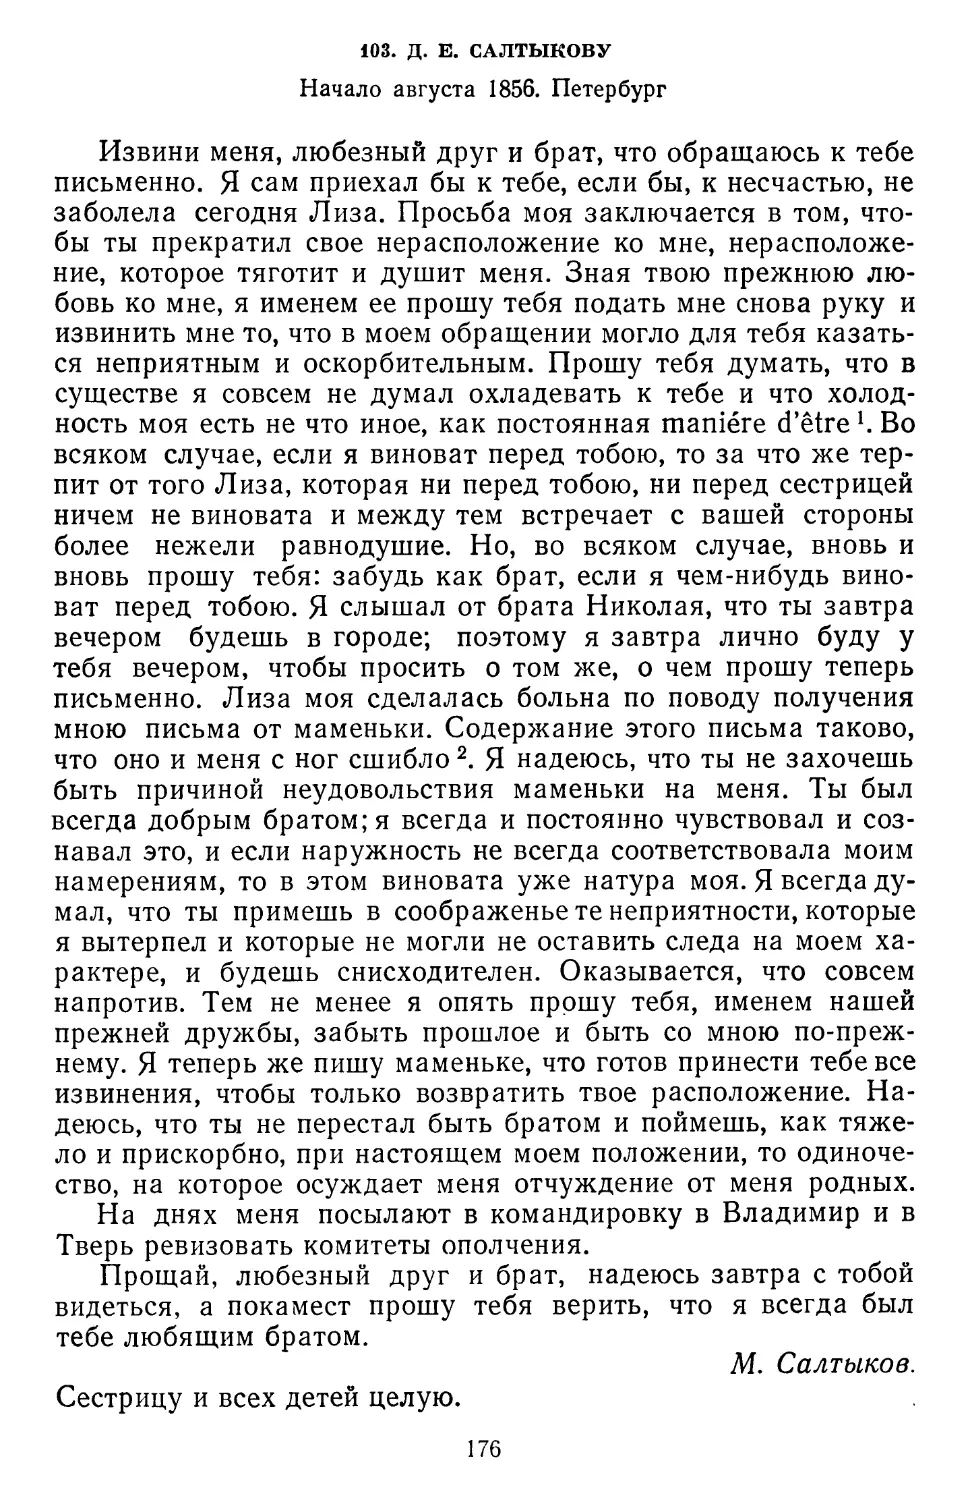 103.Д.Е. Салтыкову. Начало августа 1856. Петербург